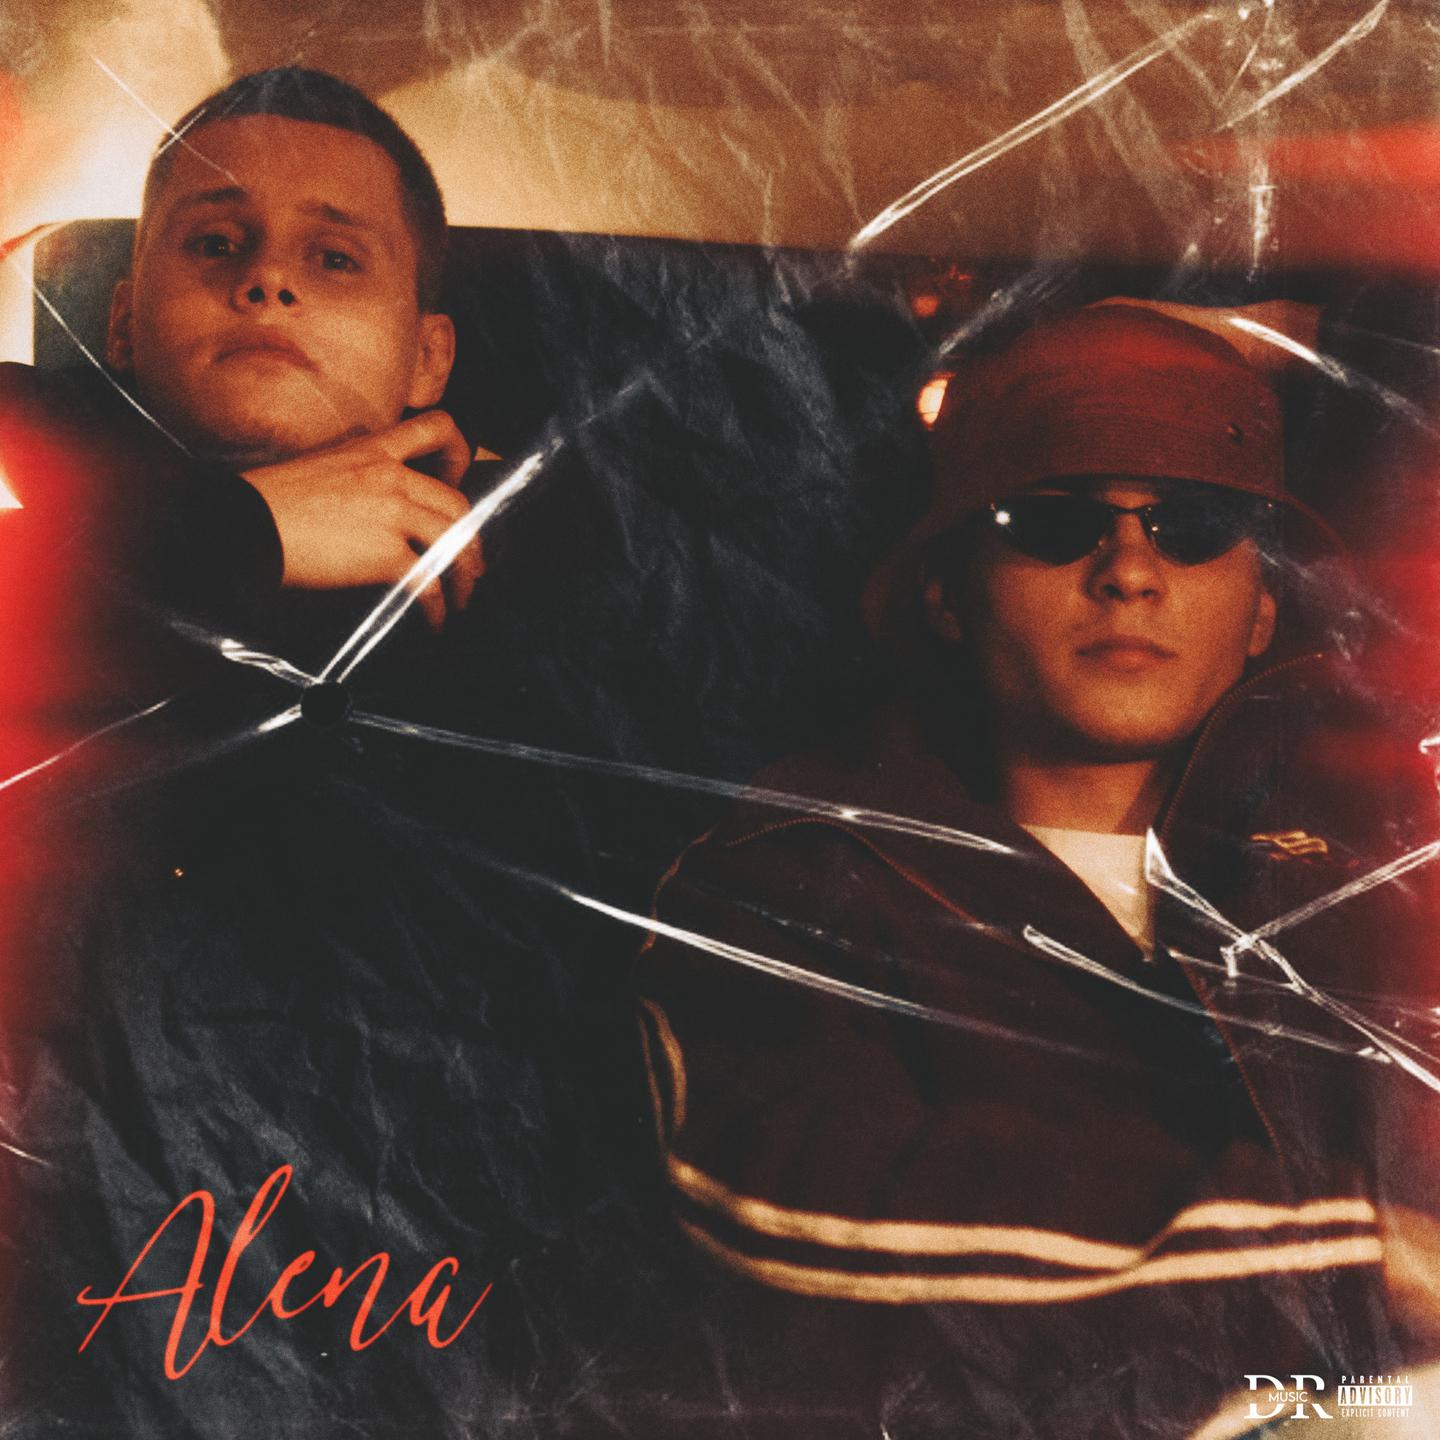 Постер альбома Alena